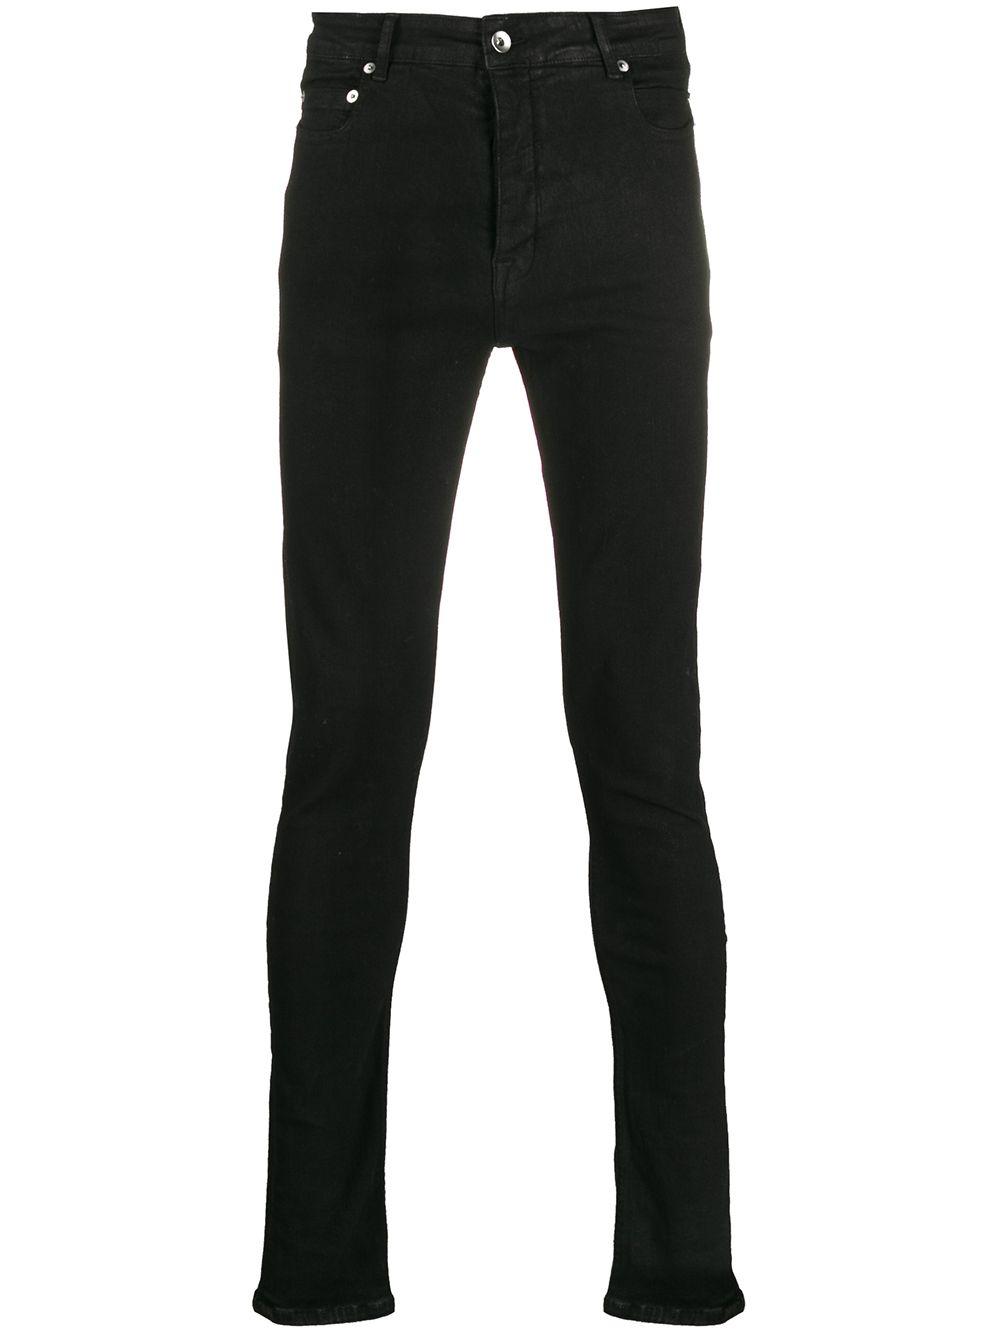 Rick Owens Drkshdw Denim Mid-rise Skinny Jeans in Black for Men - Lyst